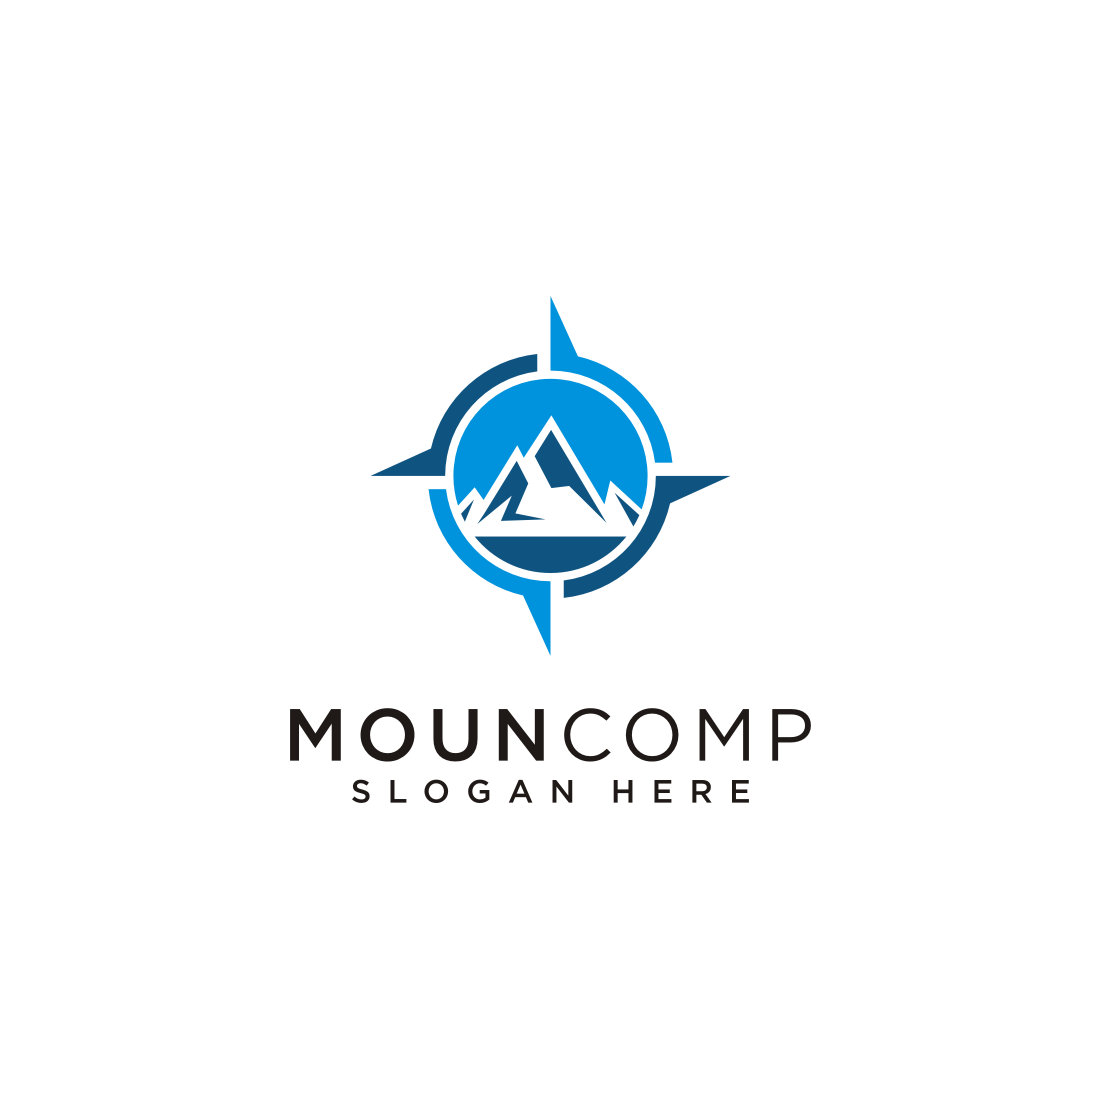 compass and mountain logo vector design cover image.